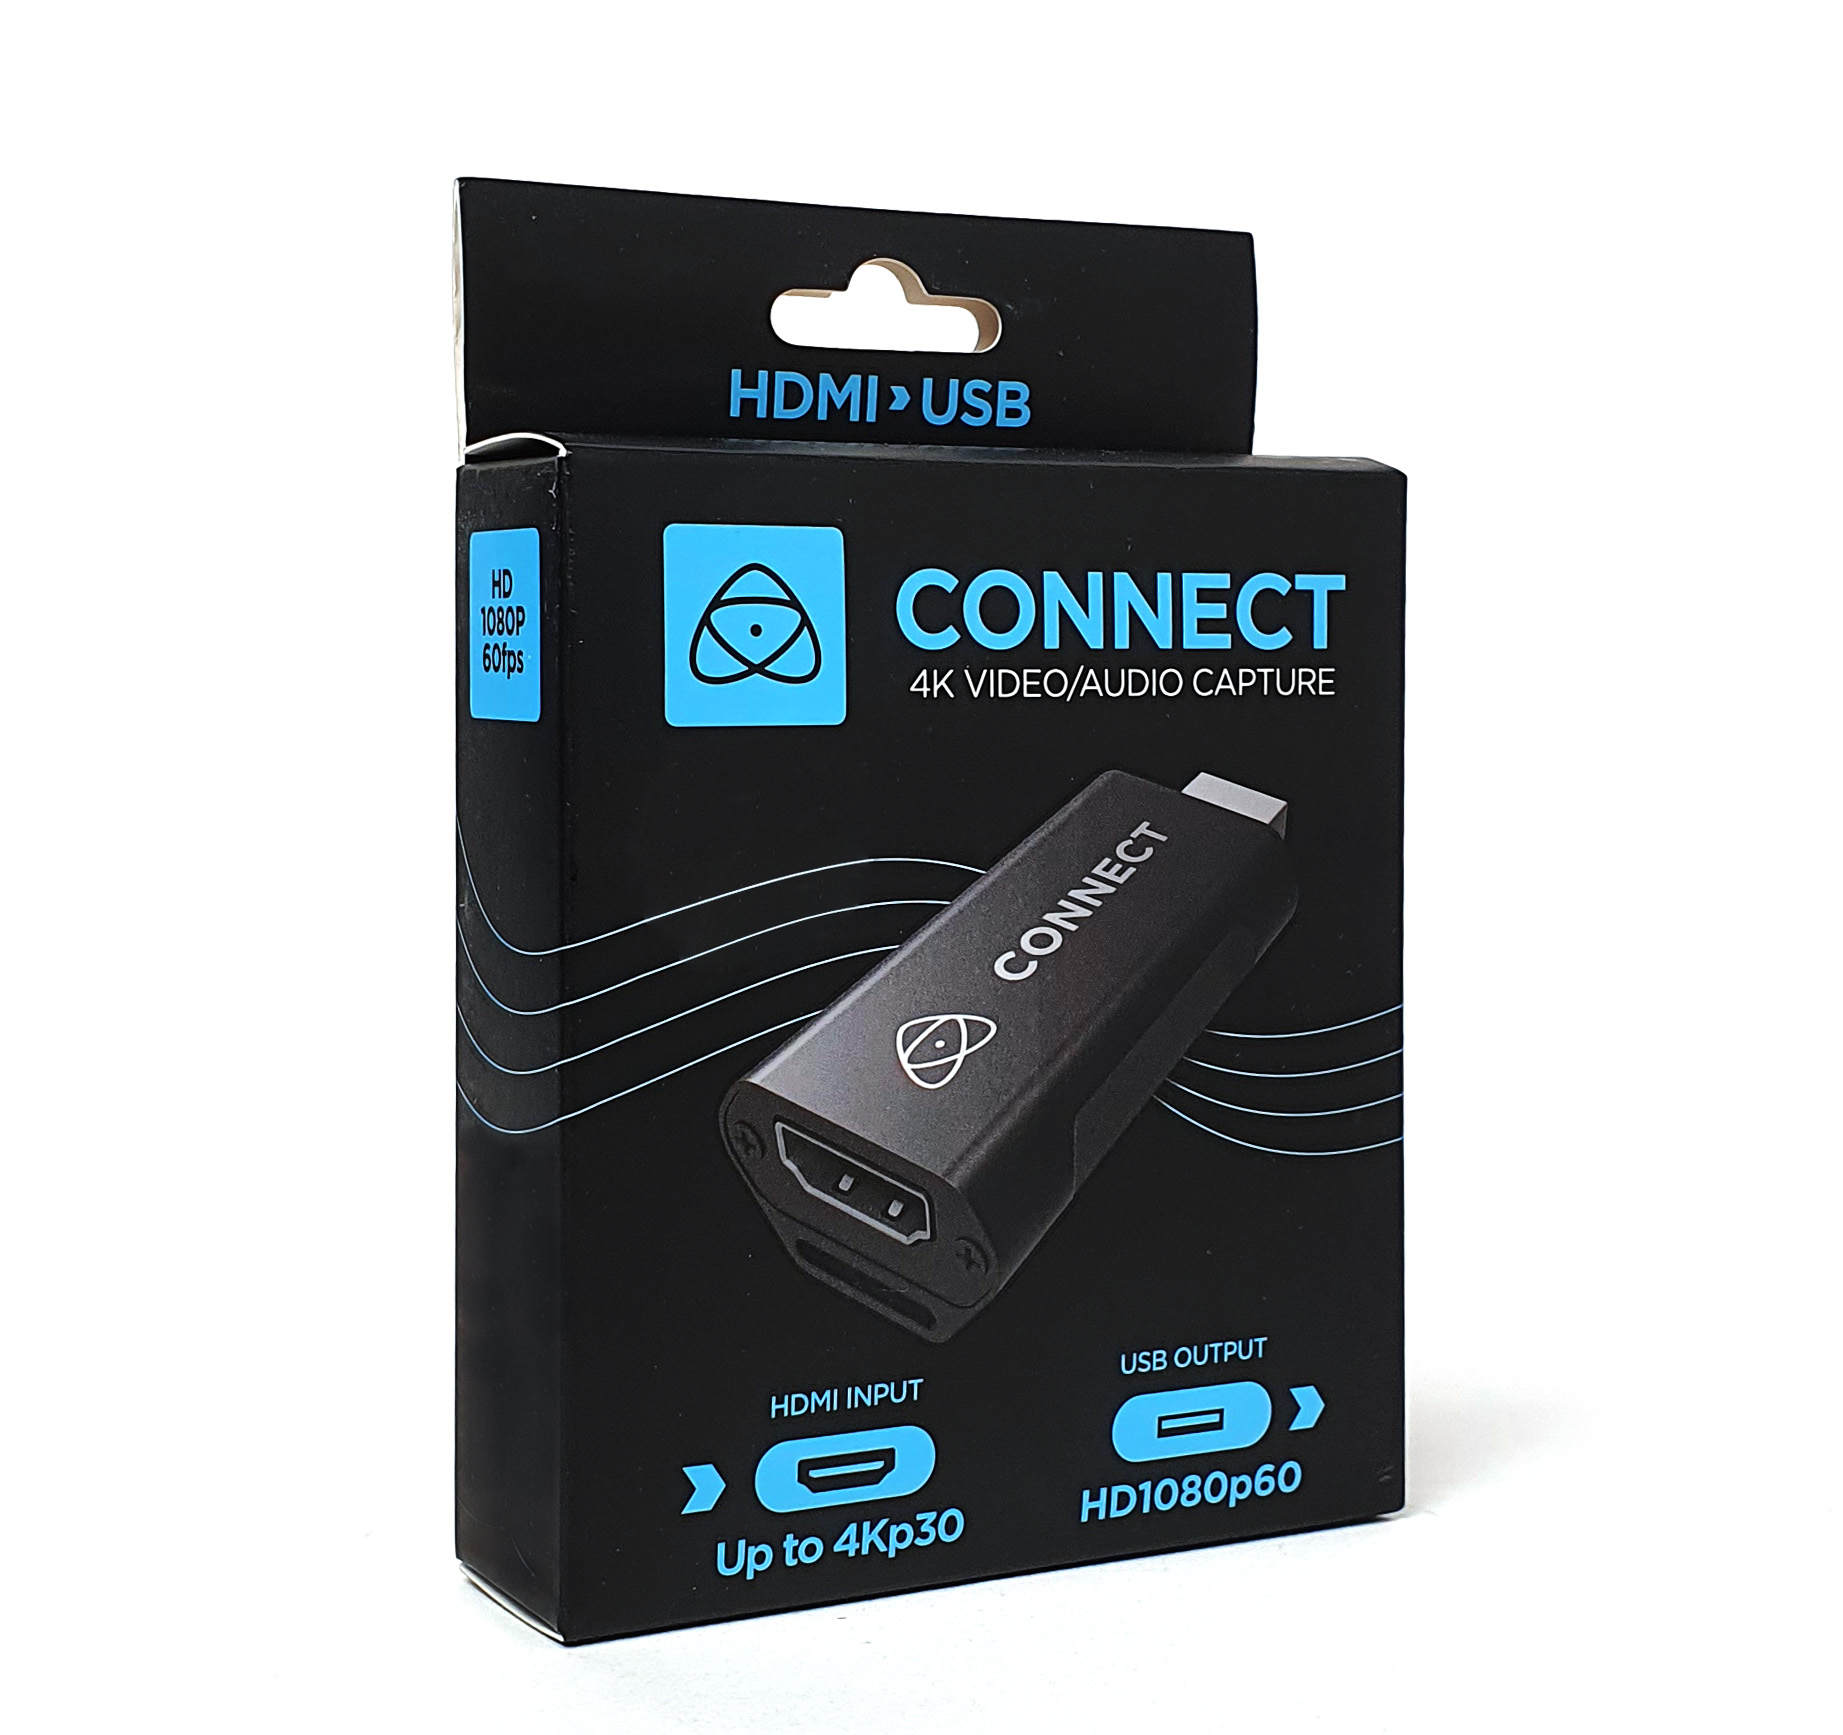 Atomos Connect 4K อุปกรณ์แปลงสัญญาณภาพ HDMI เป็น USB สำหรับสตรีมมิ่ง ผ่านโปรแกรม OBS, Wirecast, X-Split, Twitch, Facebook Live, Youtube Live ฯลฯ รองรับสัญญาณ HDMI 4K30 แปลงเป็น USB 1080p60 ราคา 3900 บาท